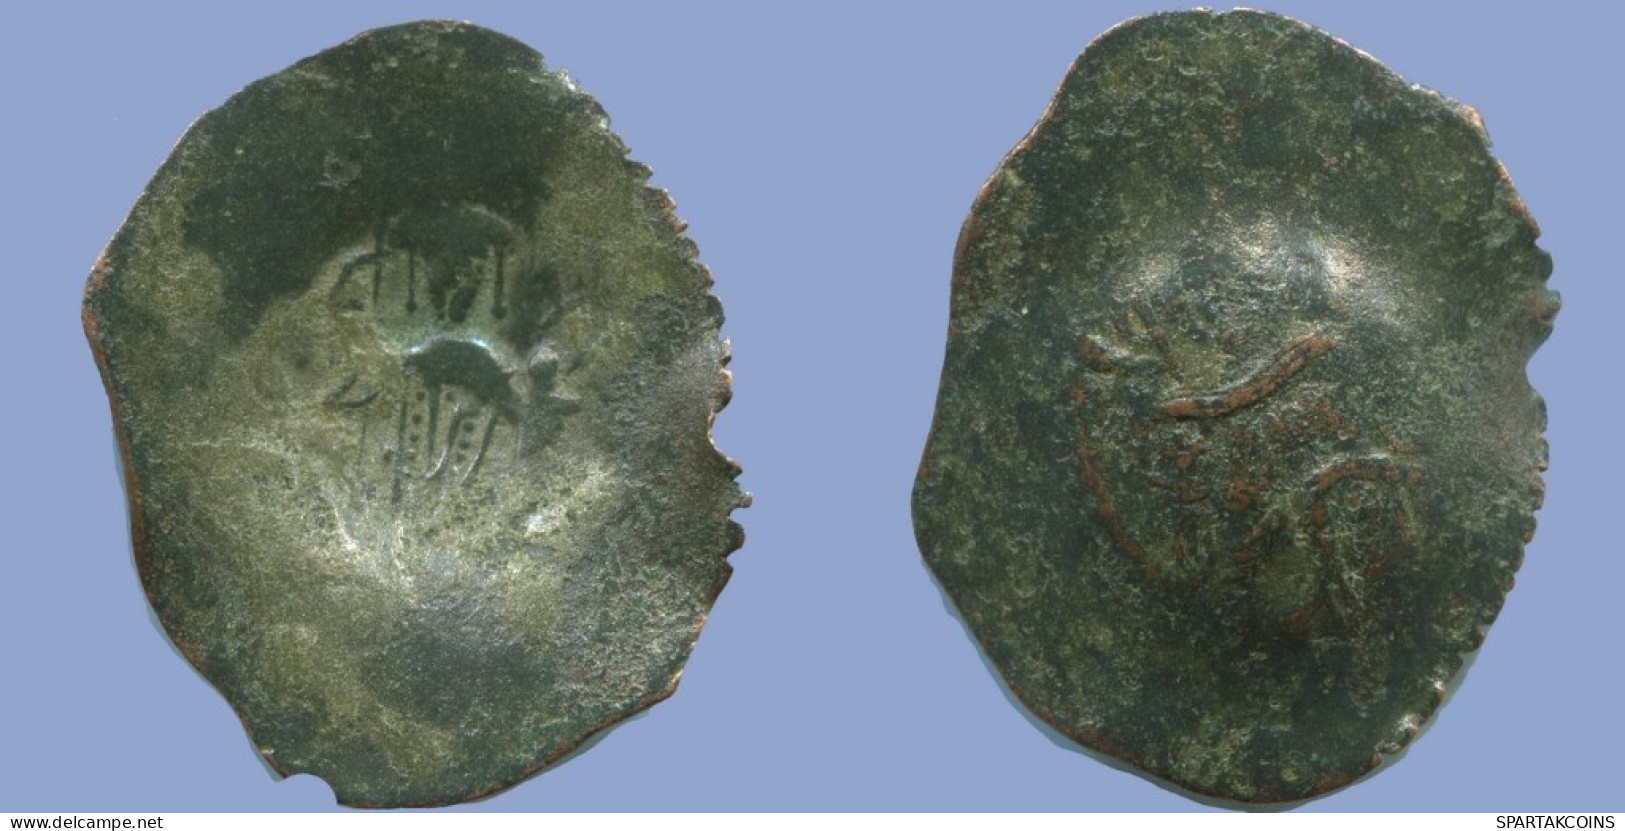 ALEXIOS III ANGELOS ASPRON TRACHY BILLON BYZANTINE Coin 1.6g/25mm #AB457.9.U.A - Byzantinische Münzen